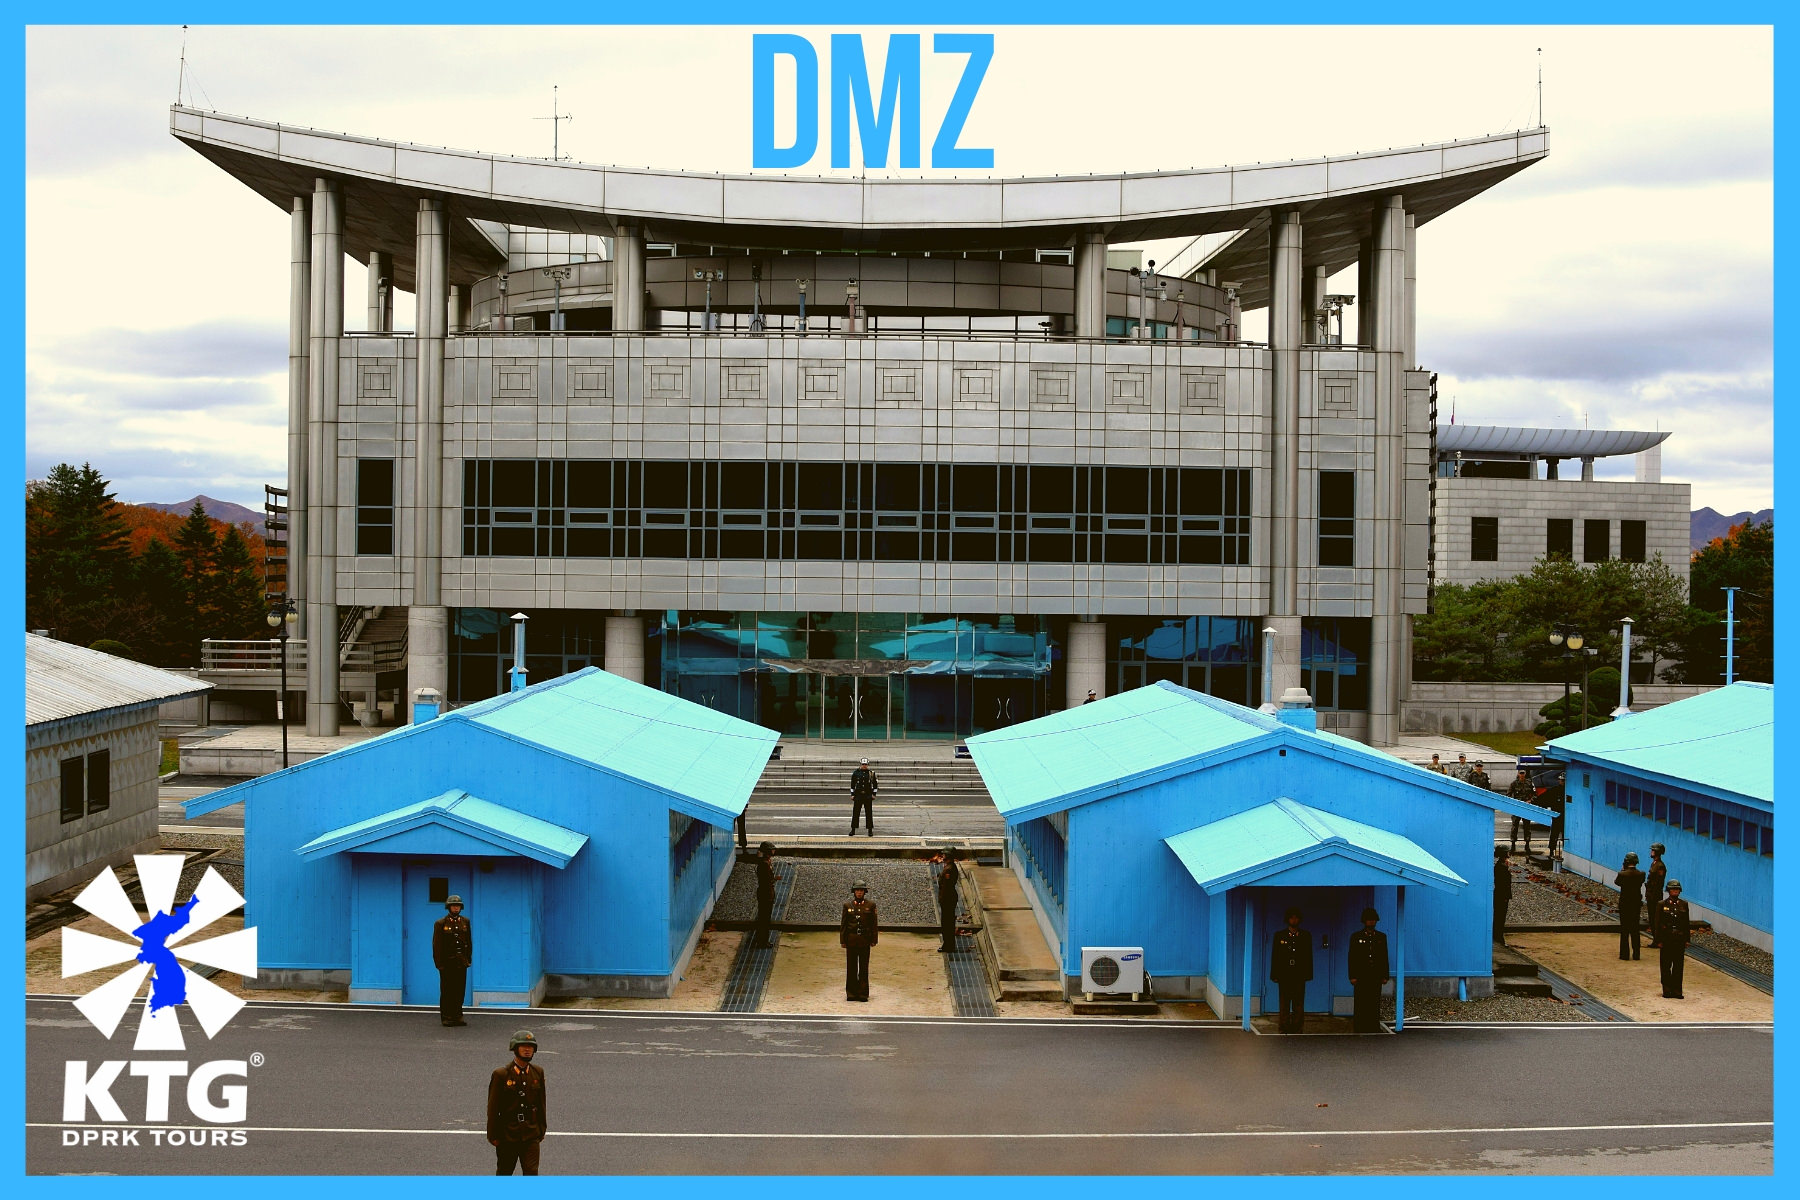 DMZ negotiation rooms in North Korea and South Korea, Panmunjom